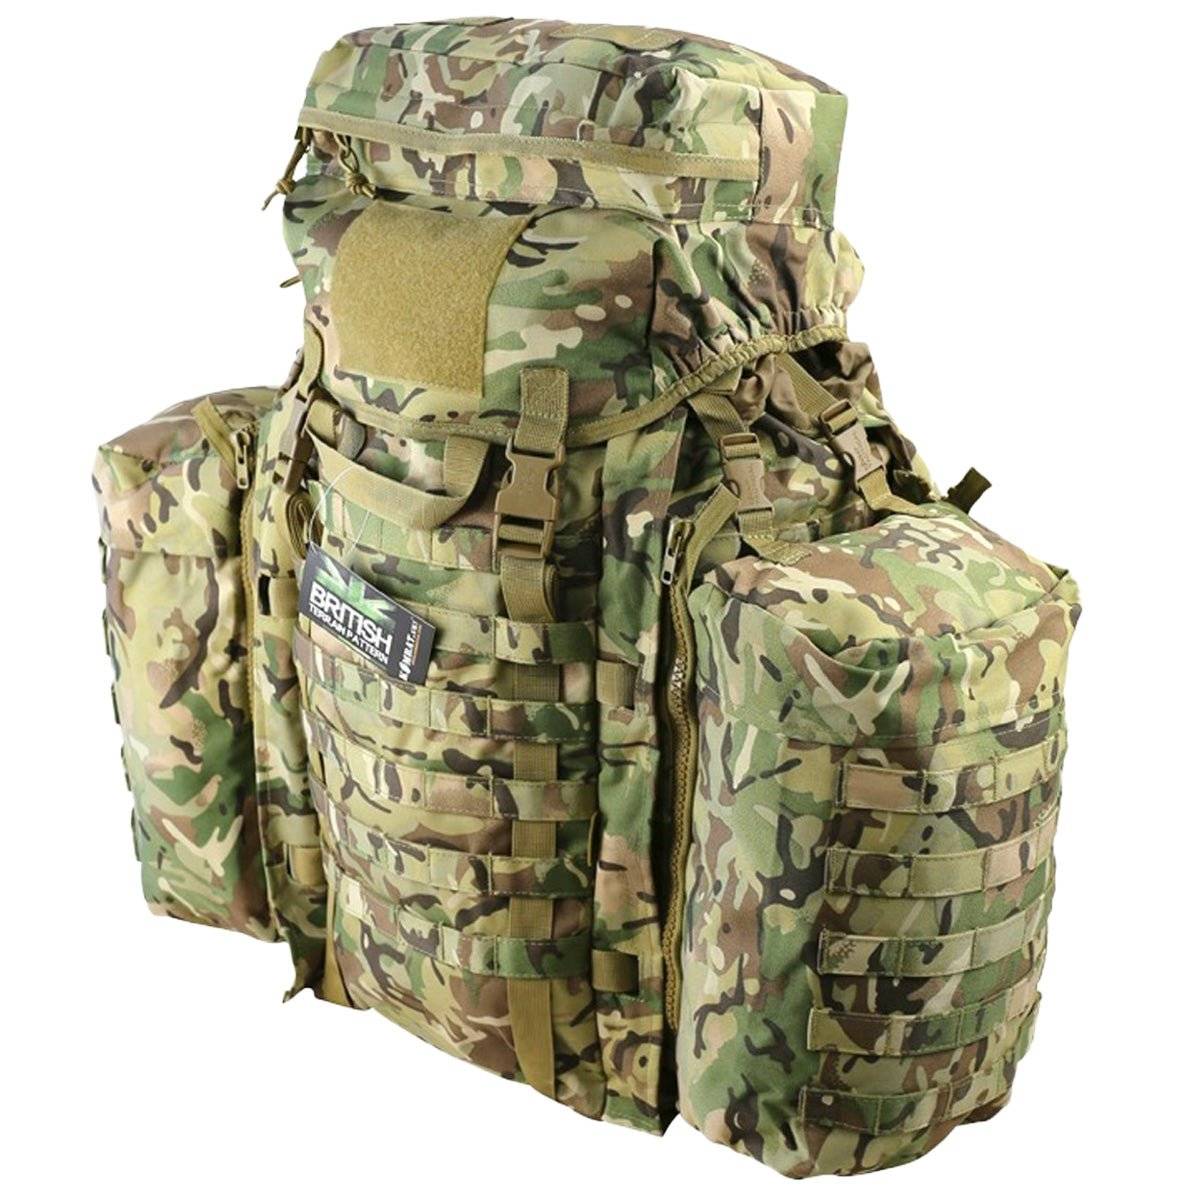 Kombat 90L Tactical Assualt Pack BTP with Pouches - John Bull Clothing